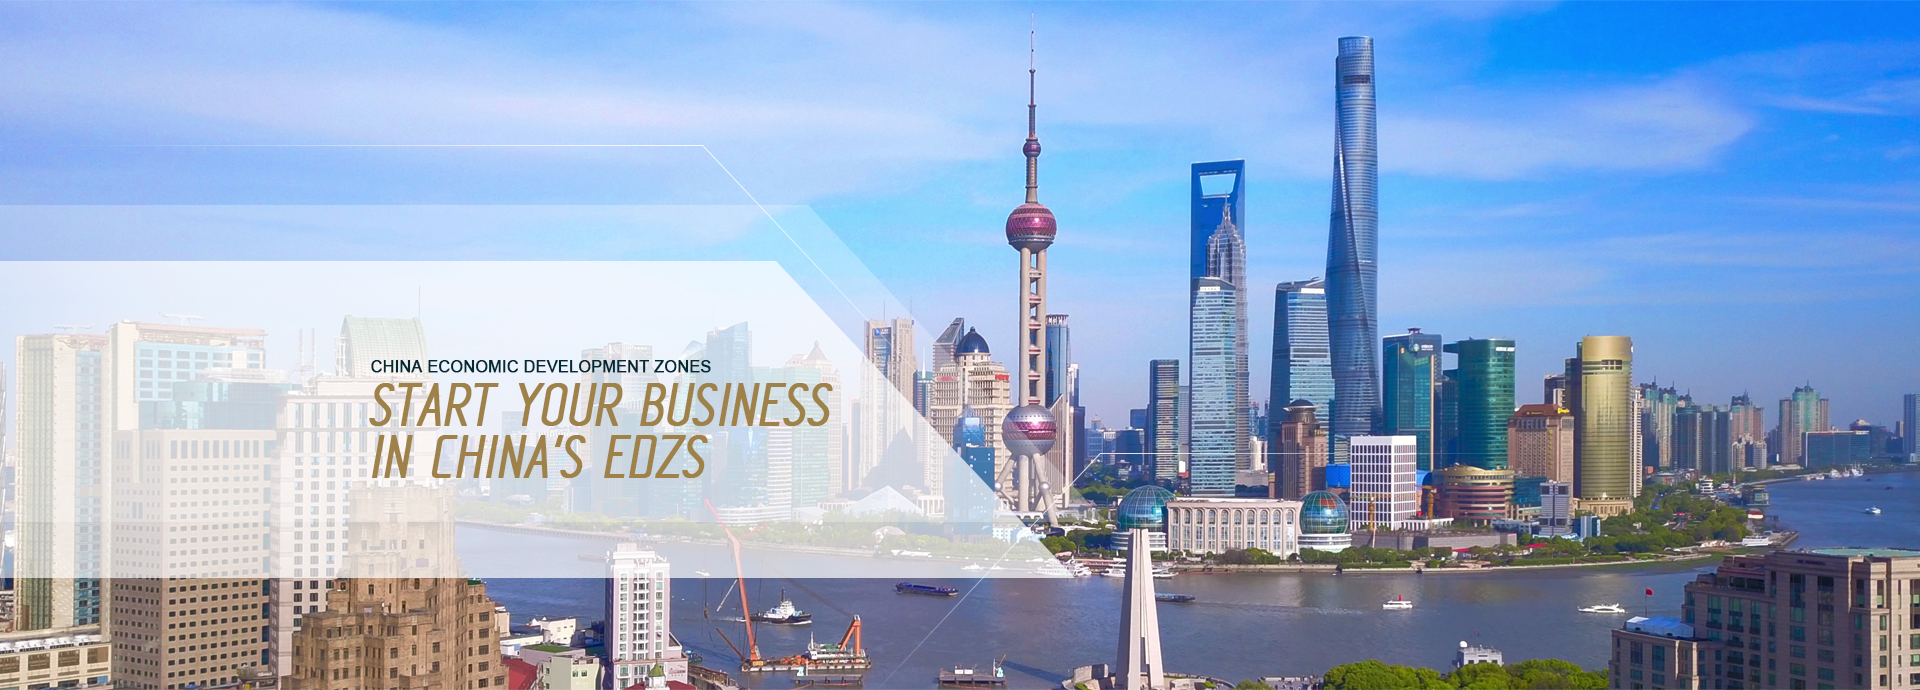 Start your business in China's economic development zones